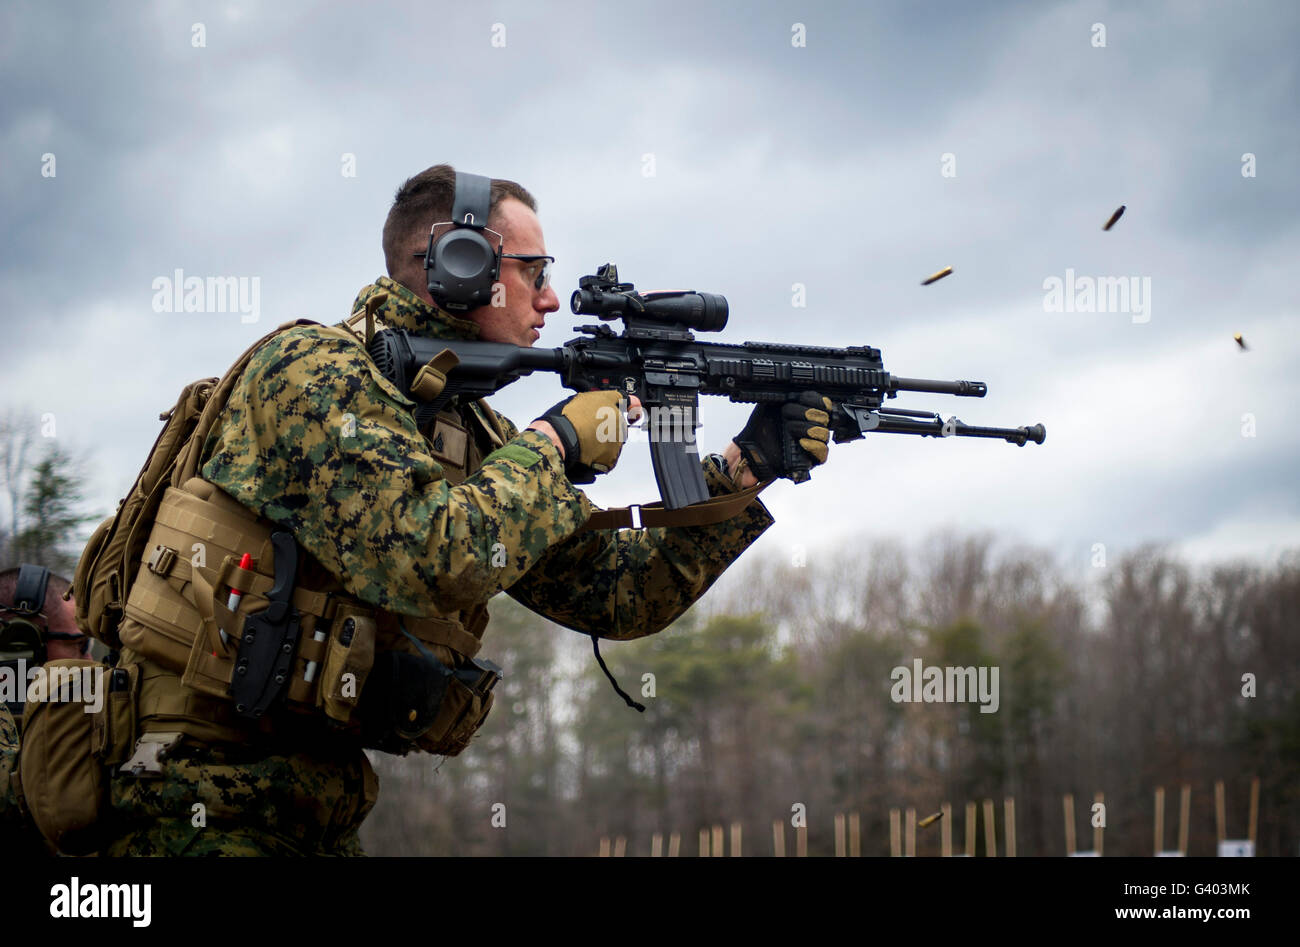 U.S. Marine firing the M27 Infantry Automatic Rifle. Stock Photo